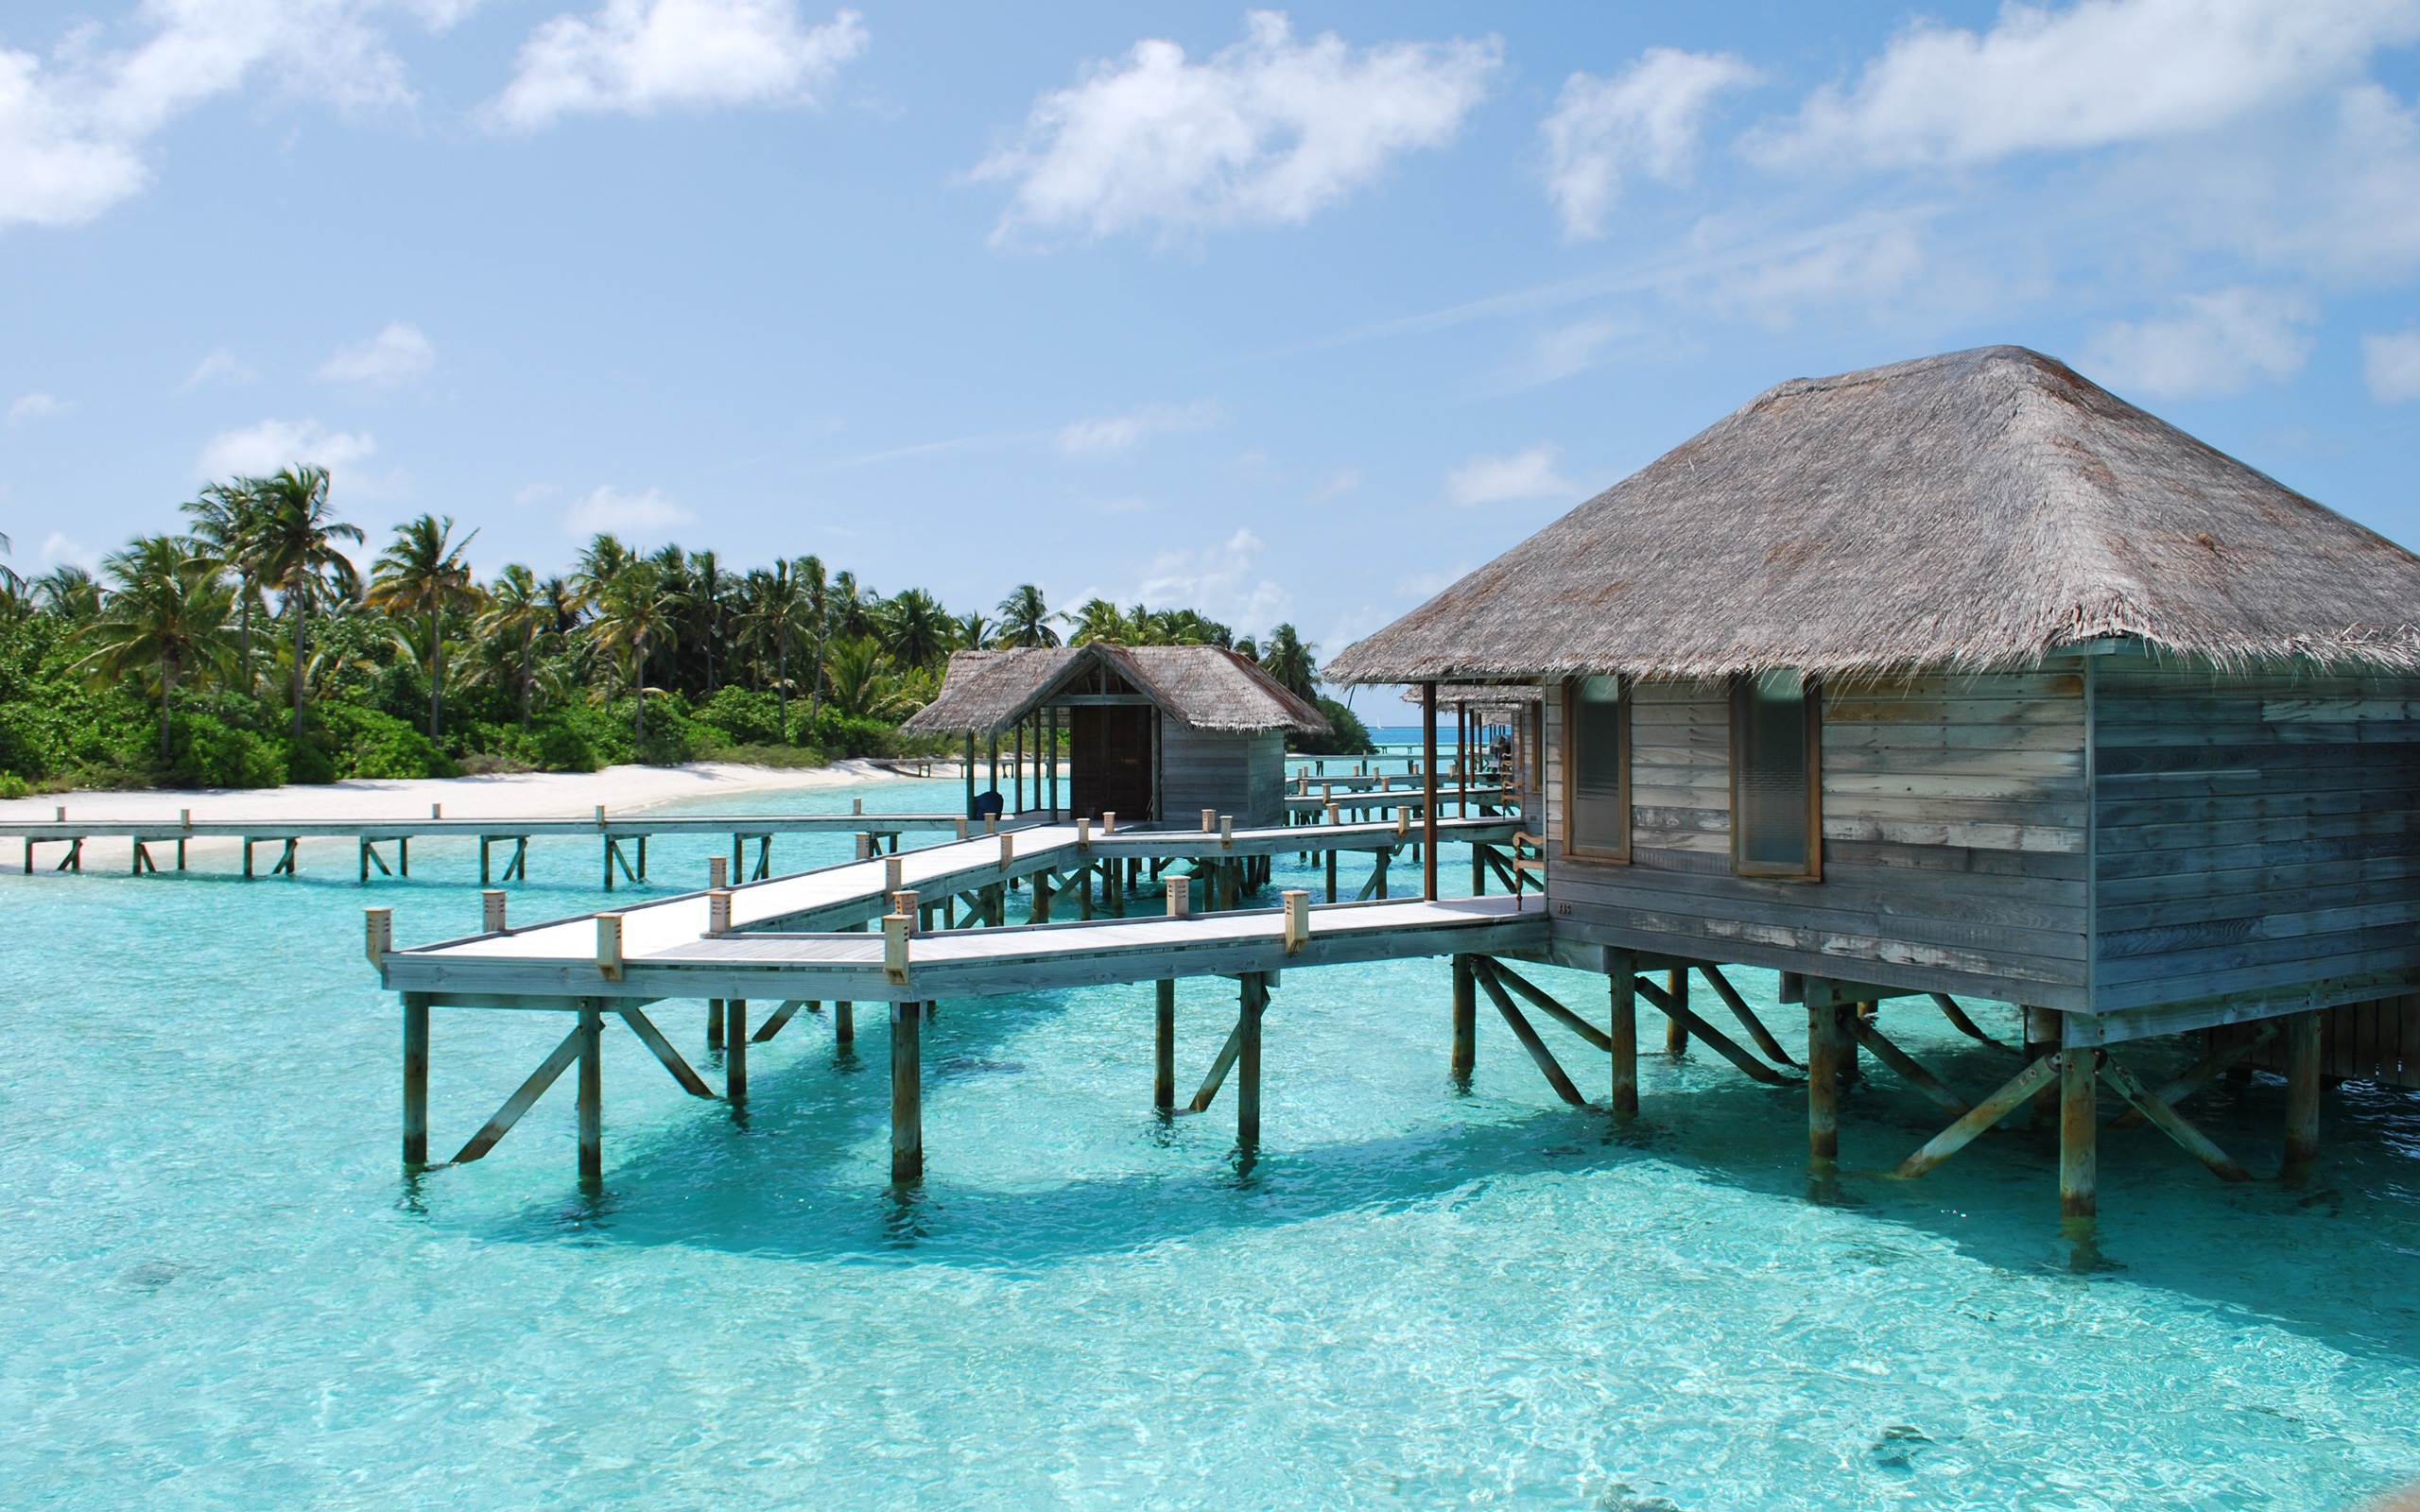 2560x1600 Maldives bungalow desktop PC and Mac wallpaper